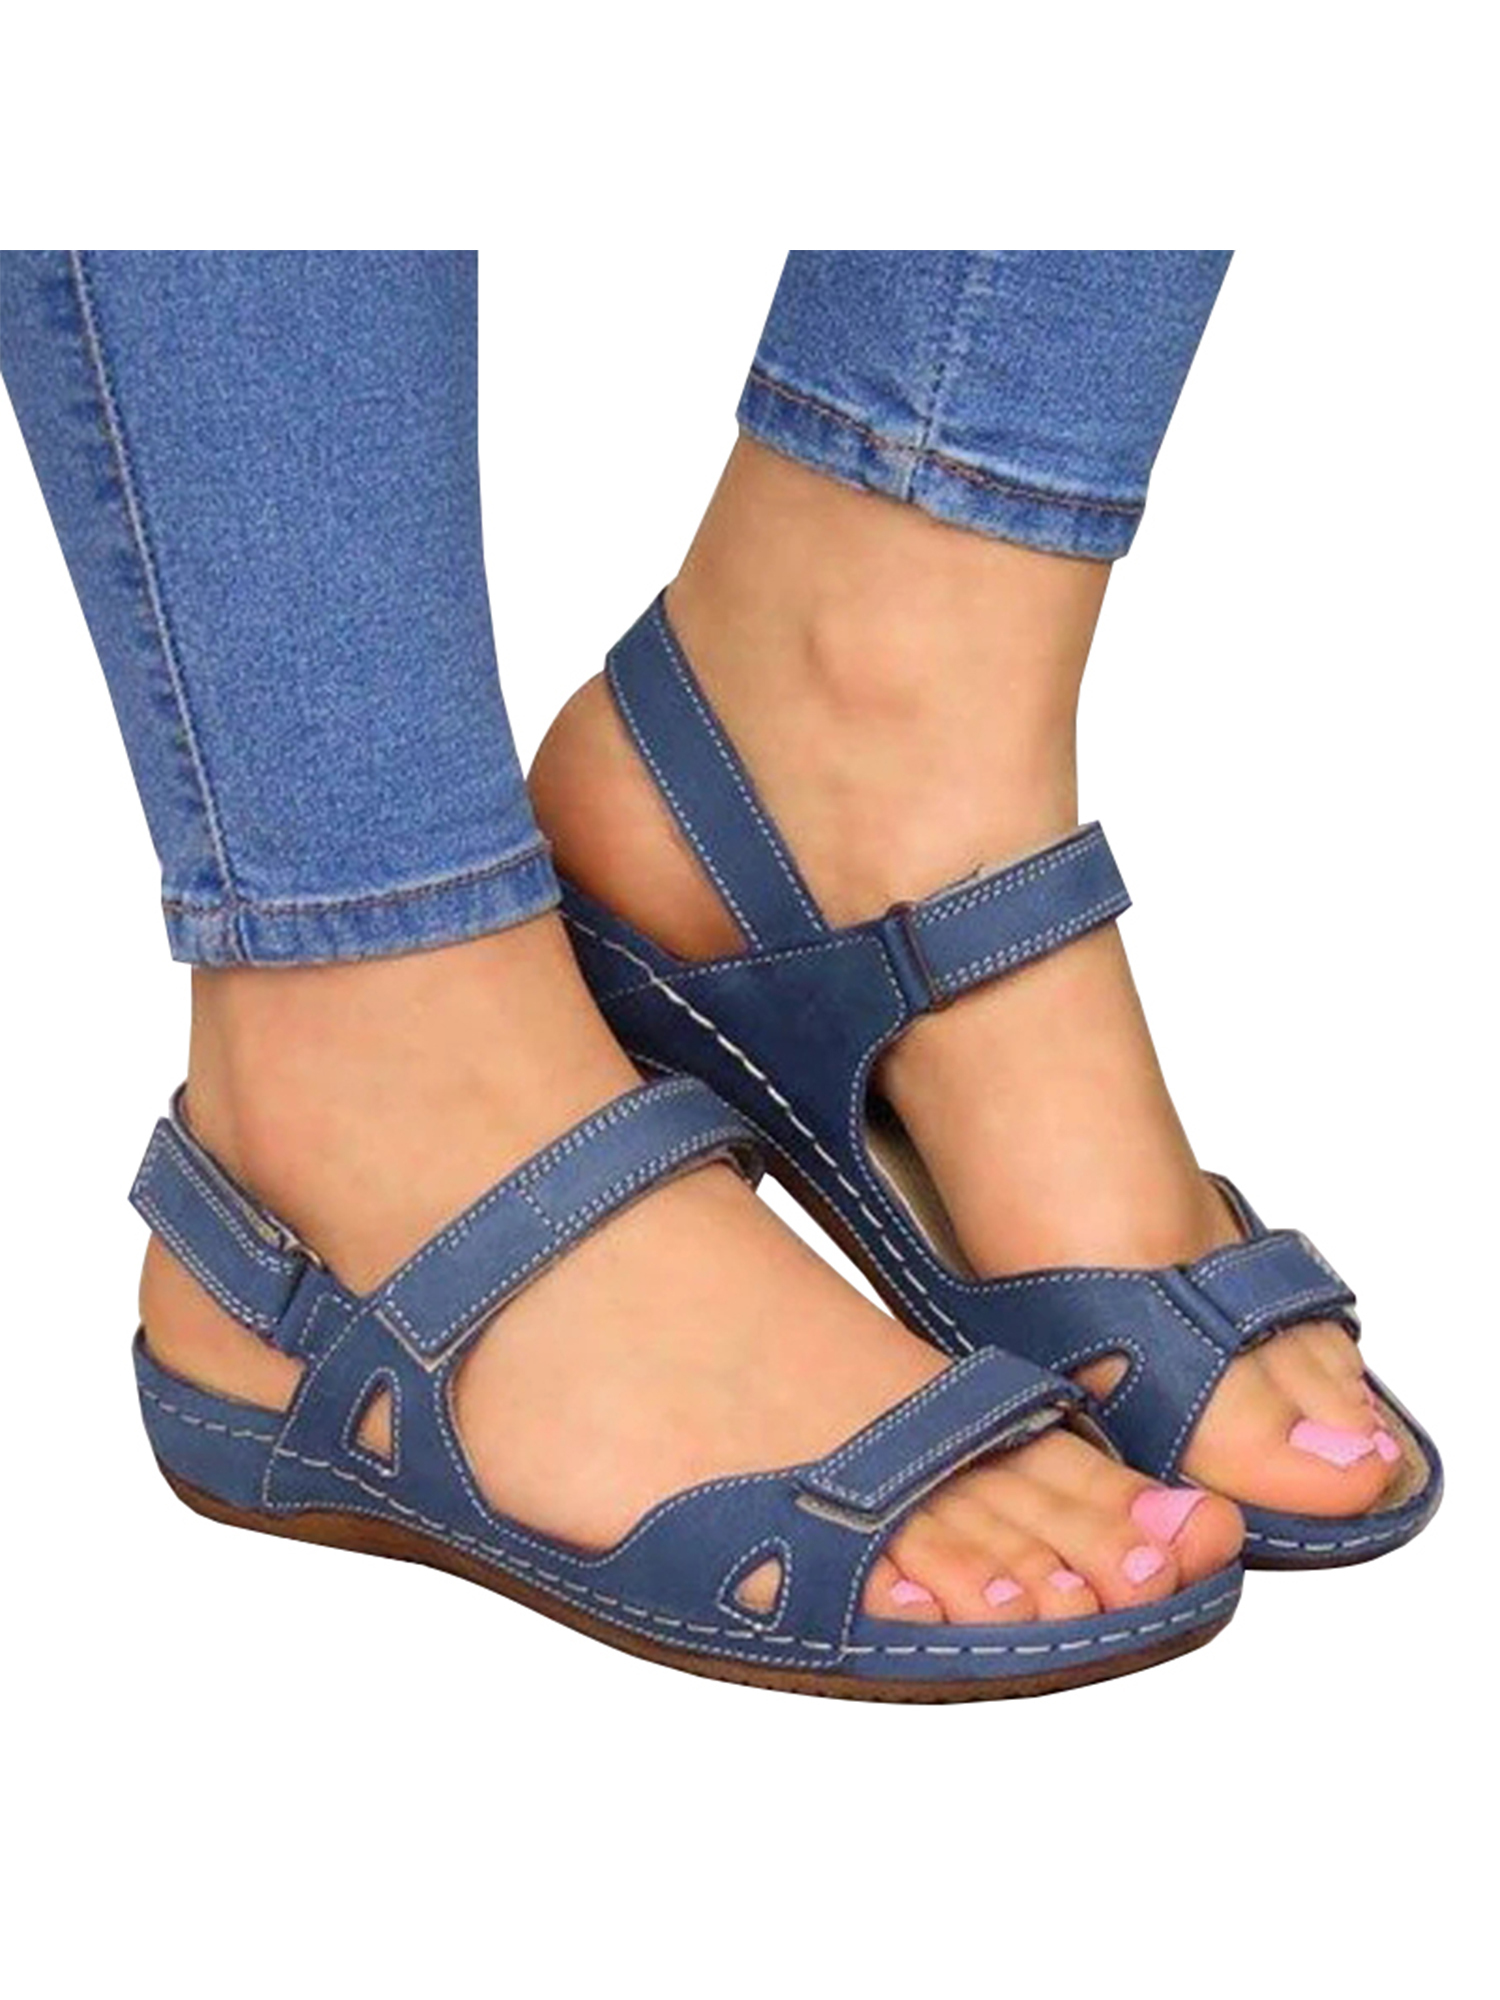 Womens Summer Boho Flip Flops Sandal Cross T Strap Thong Flat Casual Shoes Size - image 1 of 4